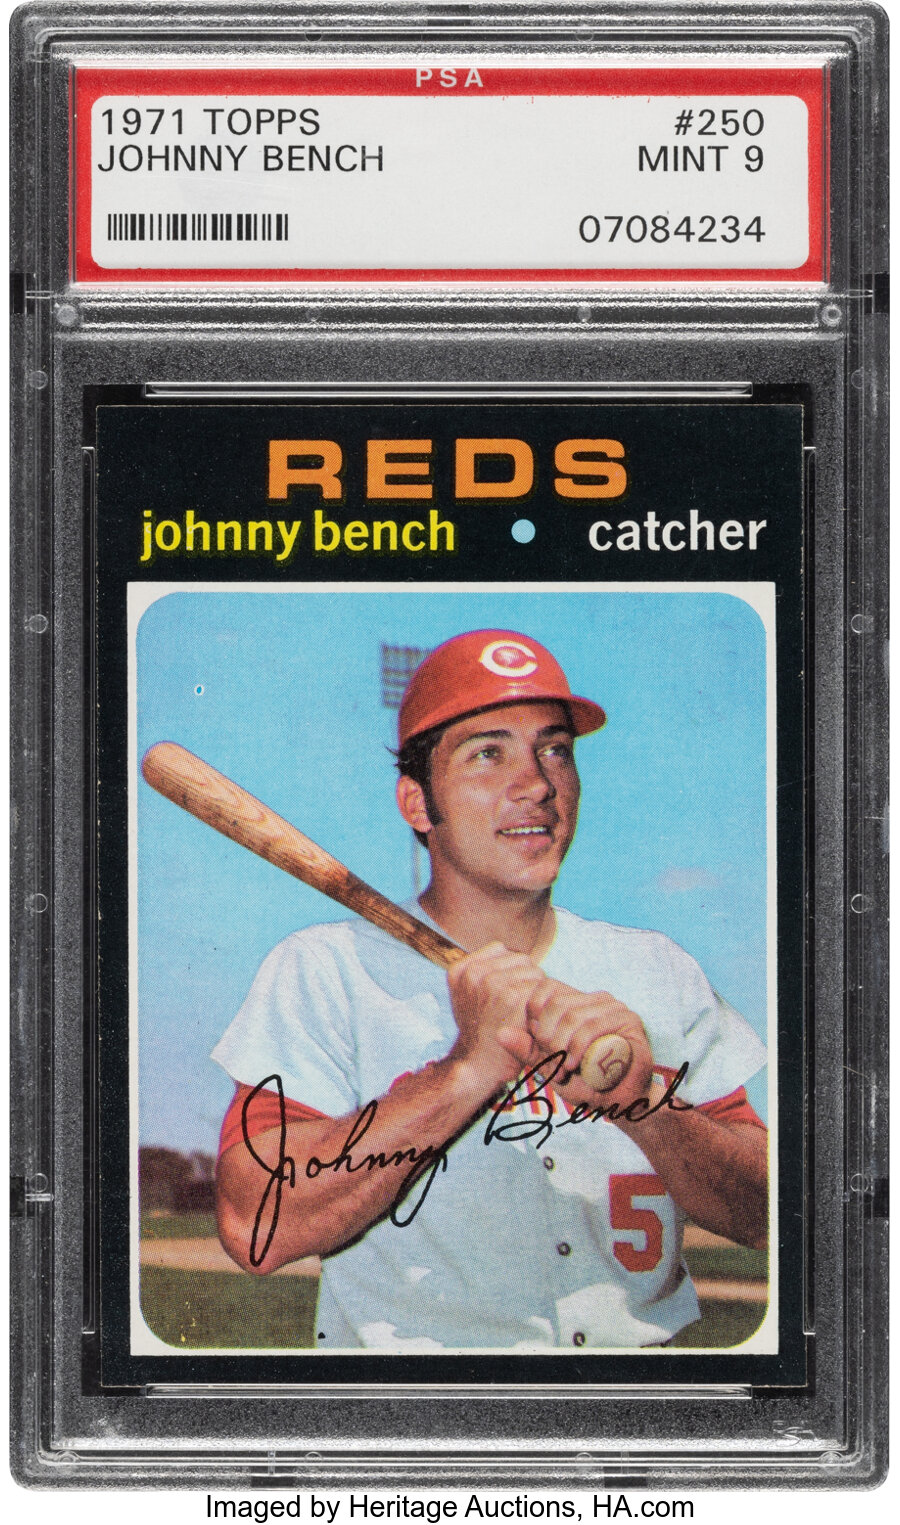 1971 Topps Johnny Bench #250 PSA Mint 9 - None Higher!